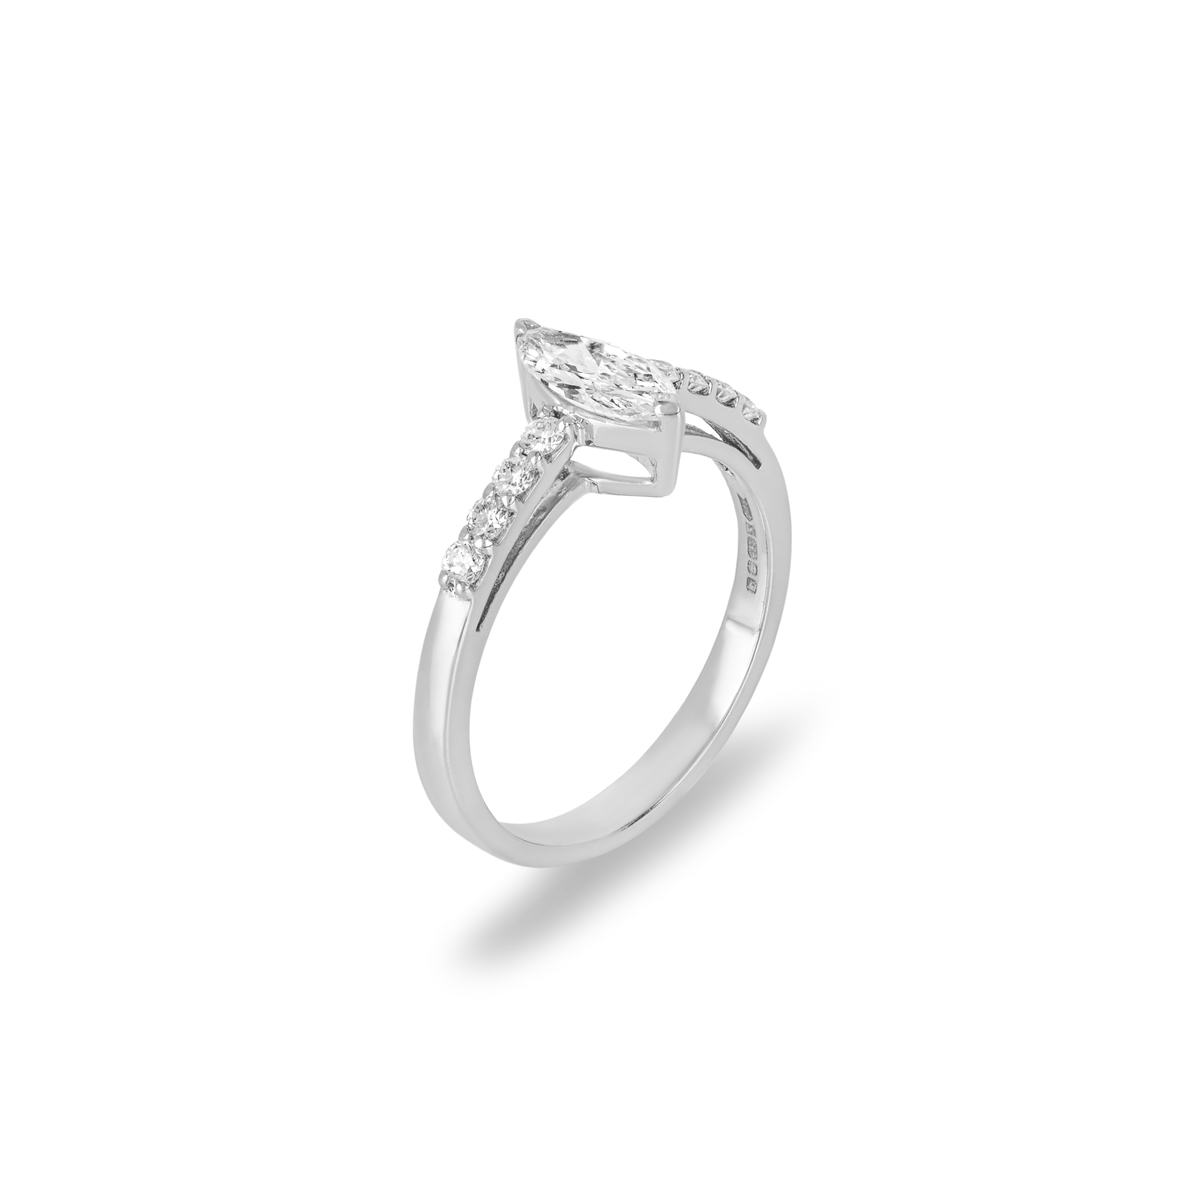 White Gold Marquise Cut Diamond Ring 0.53ct I/VS1